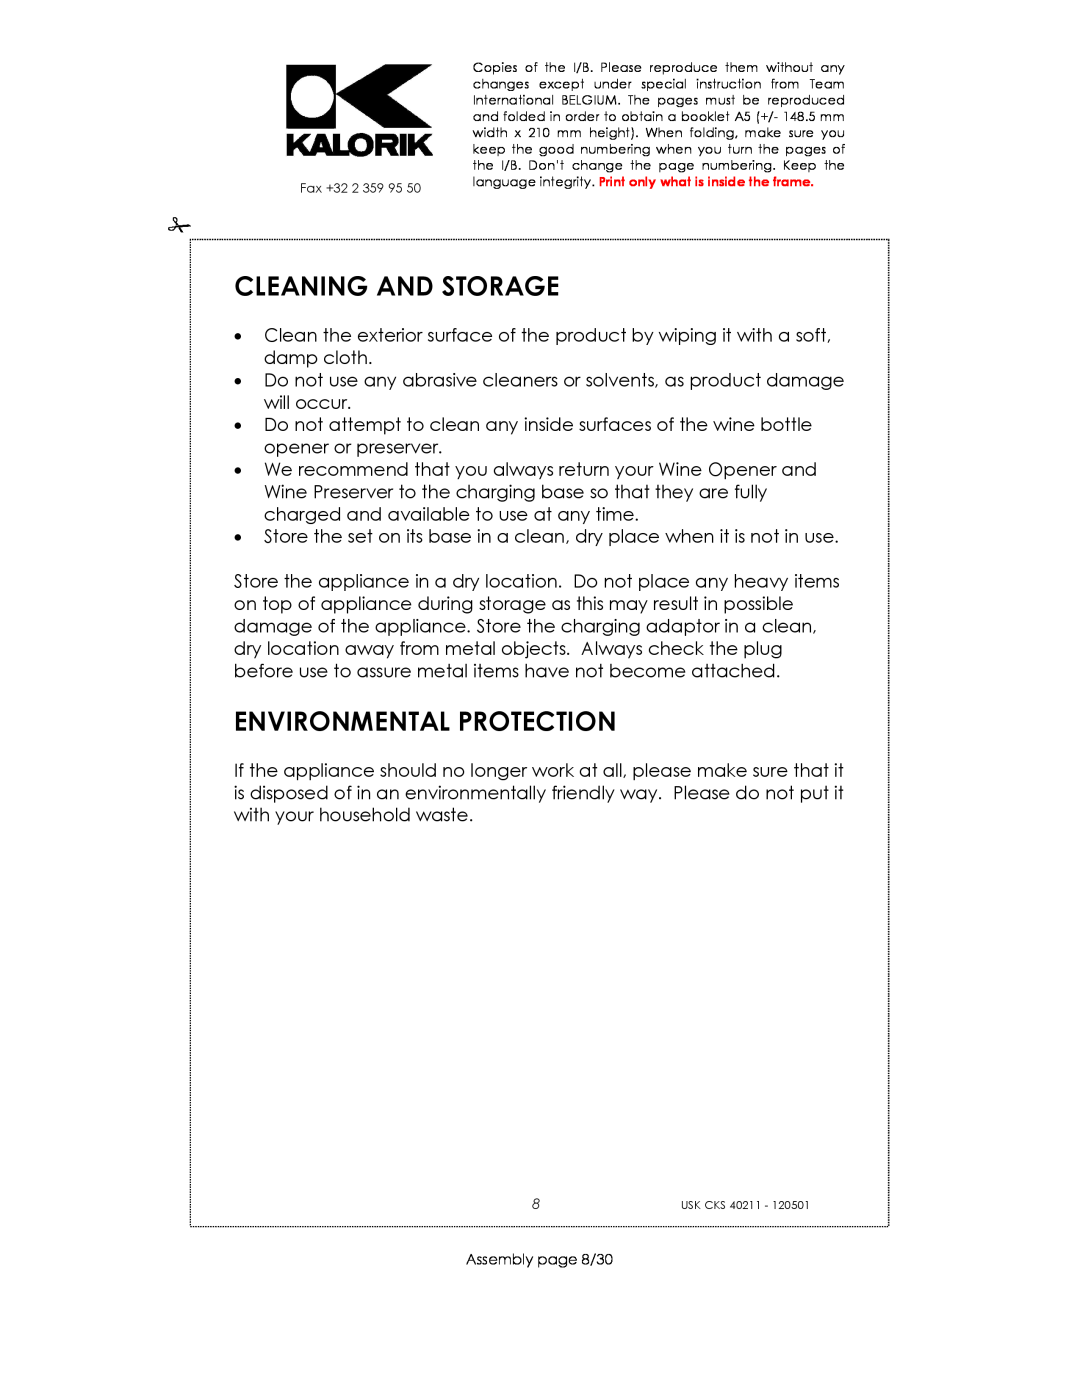 Kalorik CKS 40211 manual Cleaning And Storage, Environmental Protection 